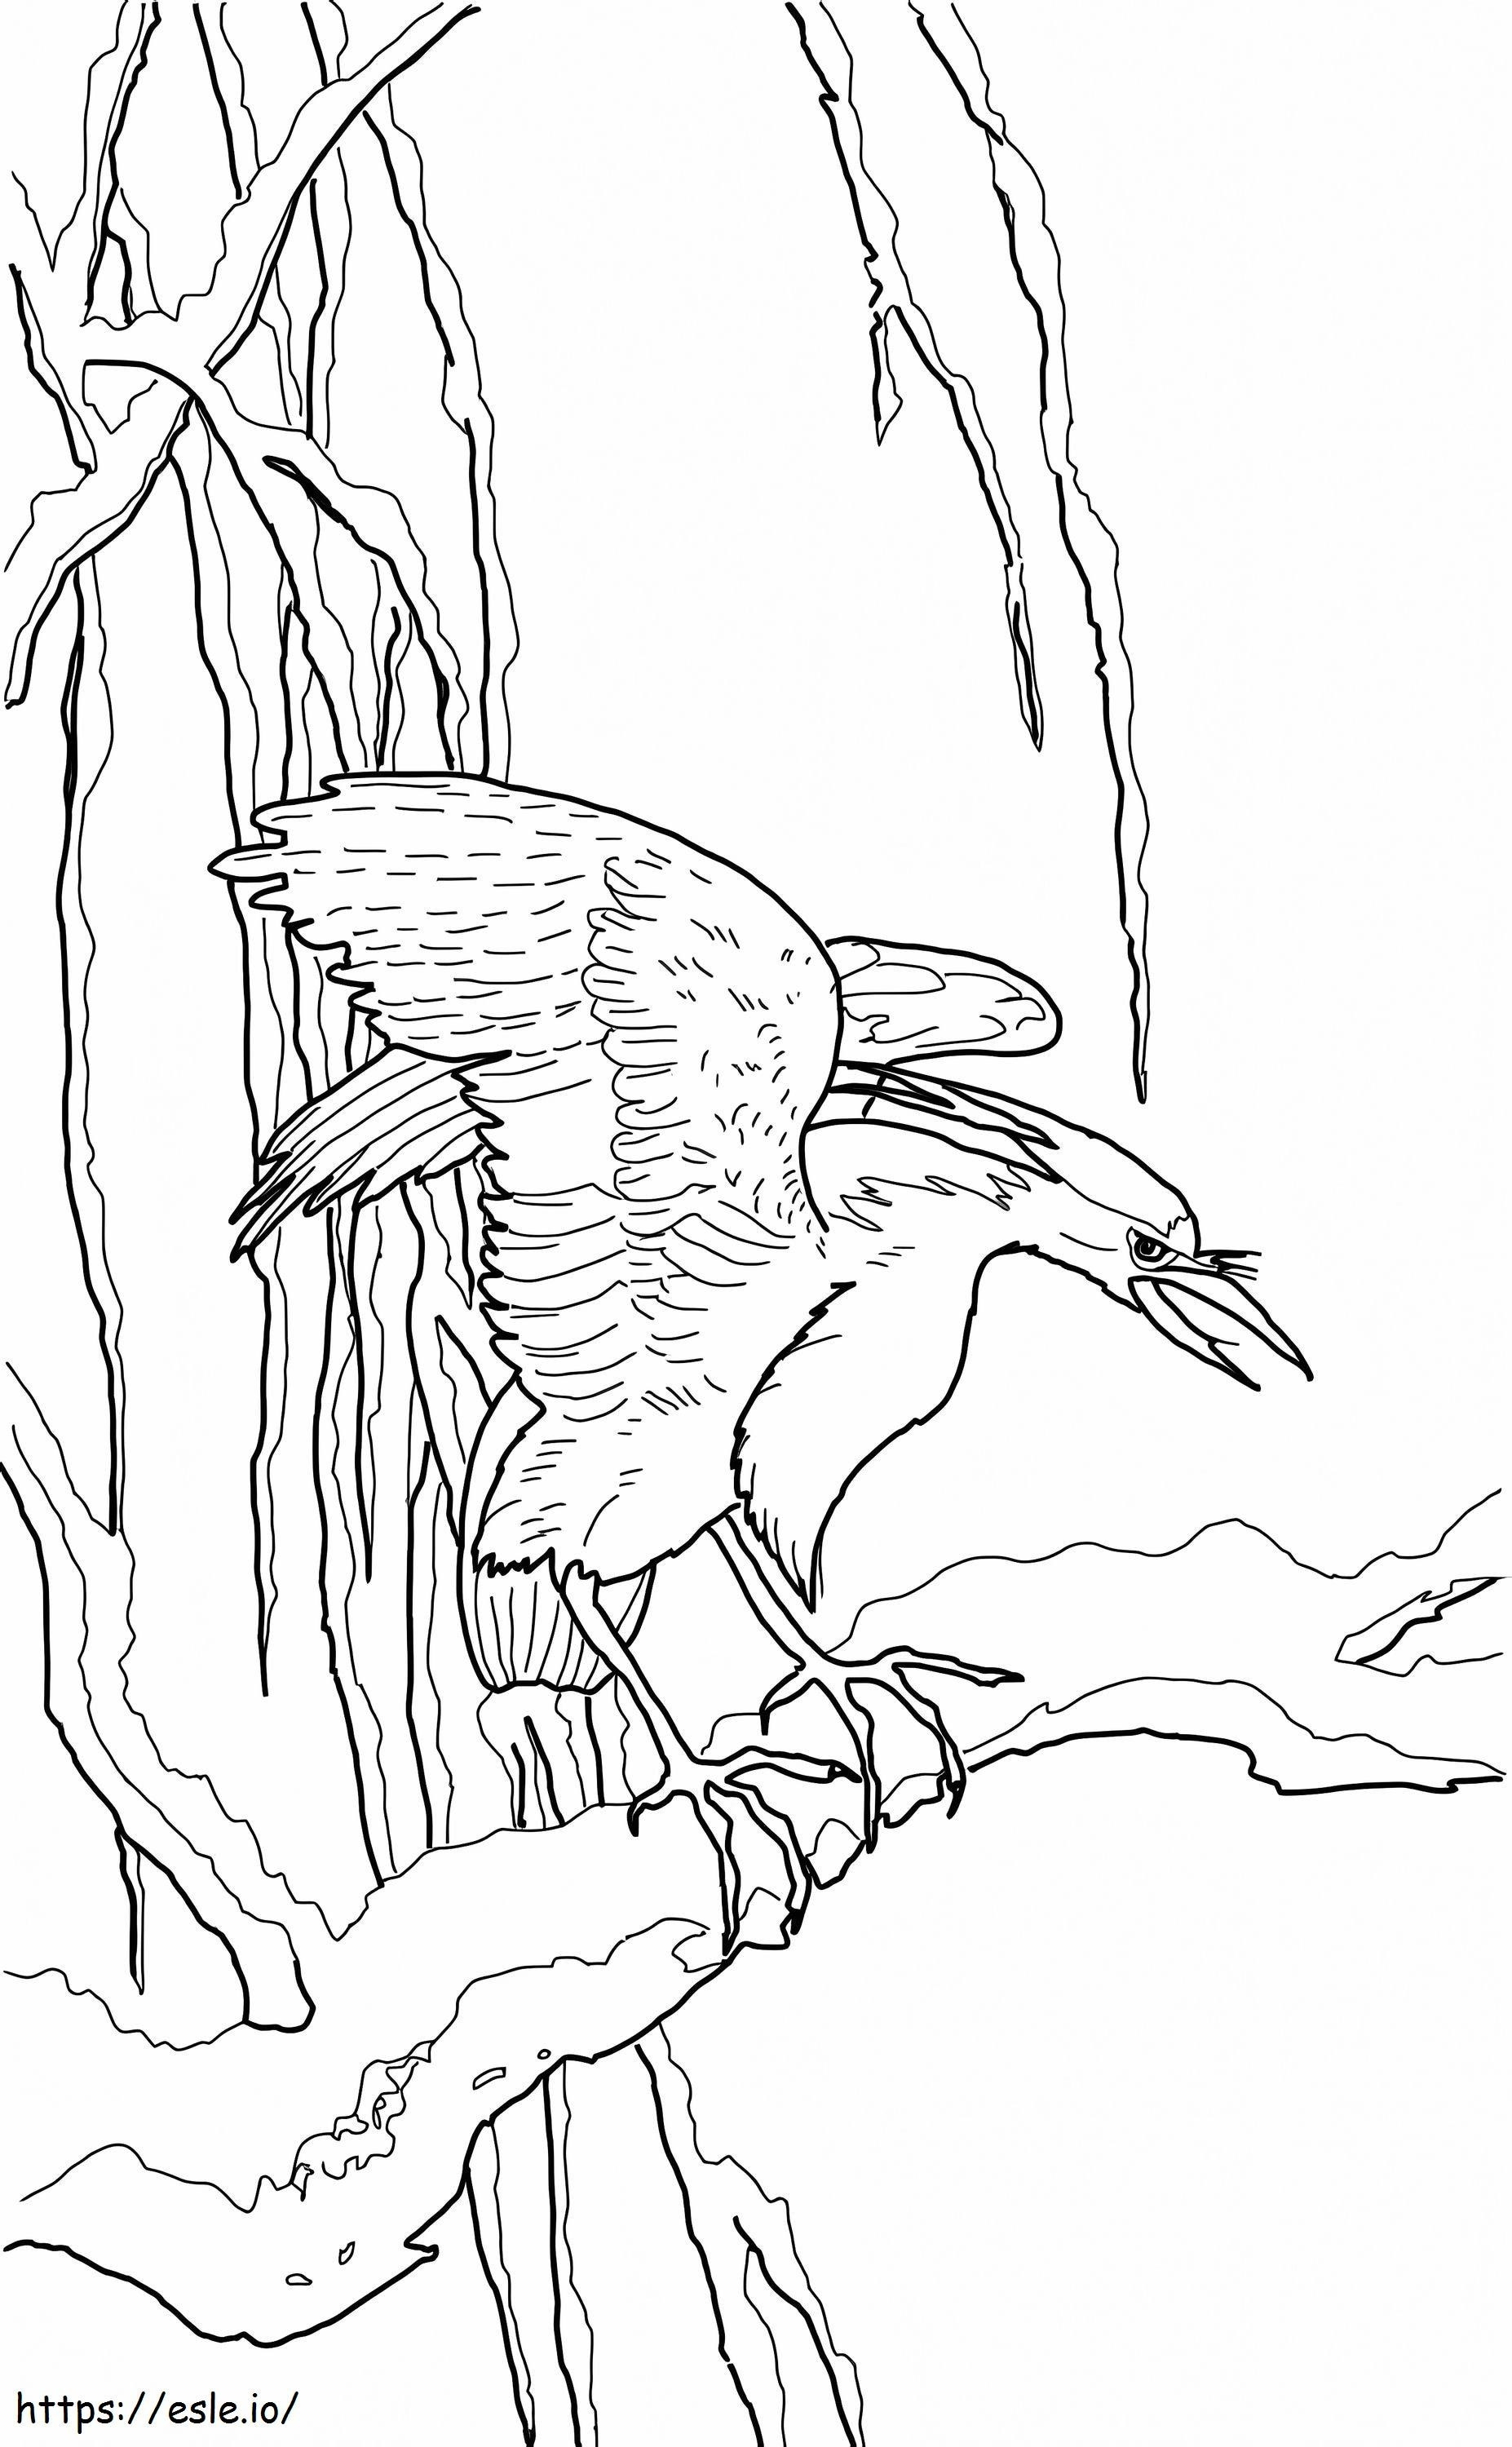 Night Heron coloring page